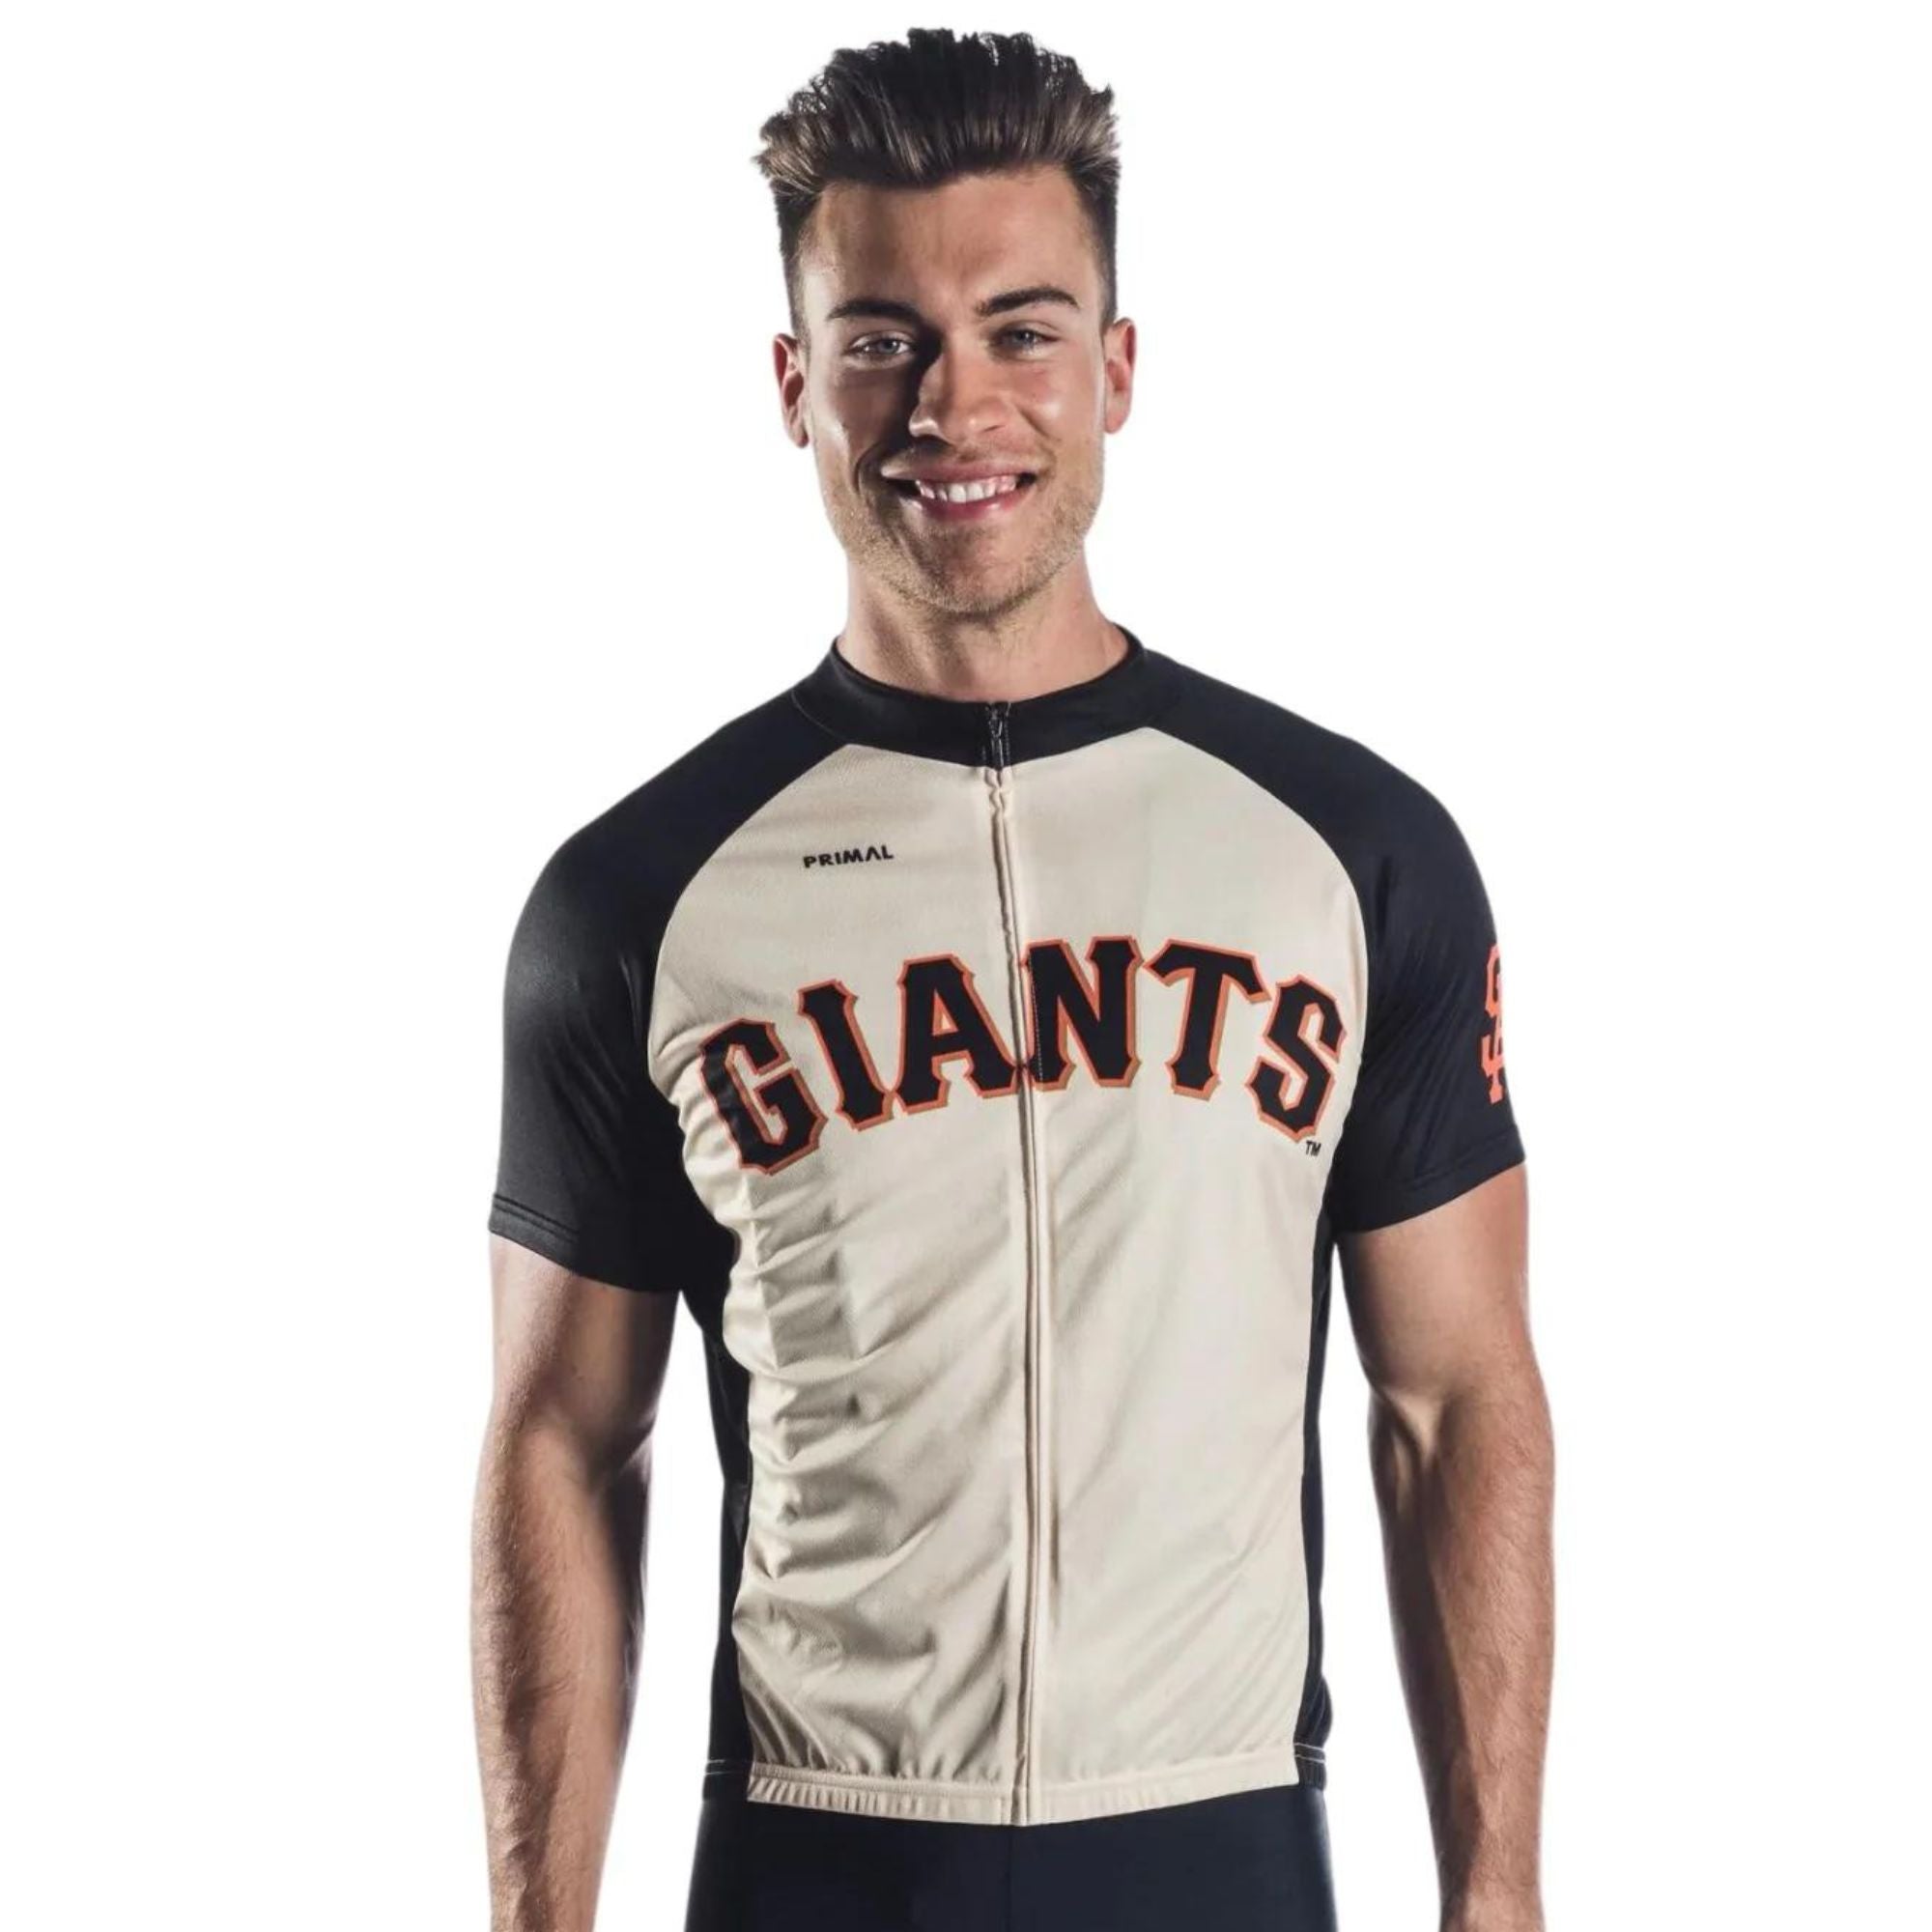 San Francisco Giants Jersey, Giants Baseball Jerseys, Uniforms